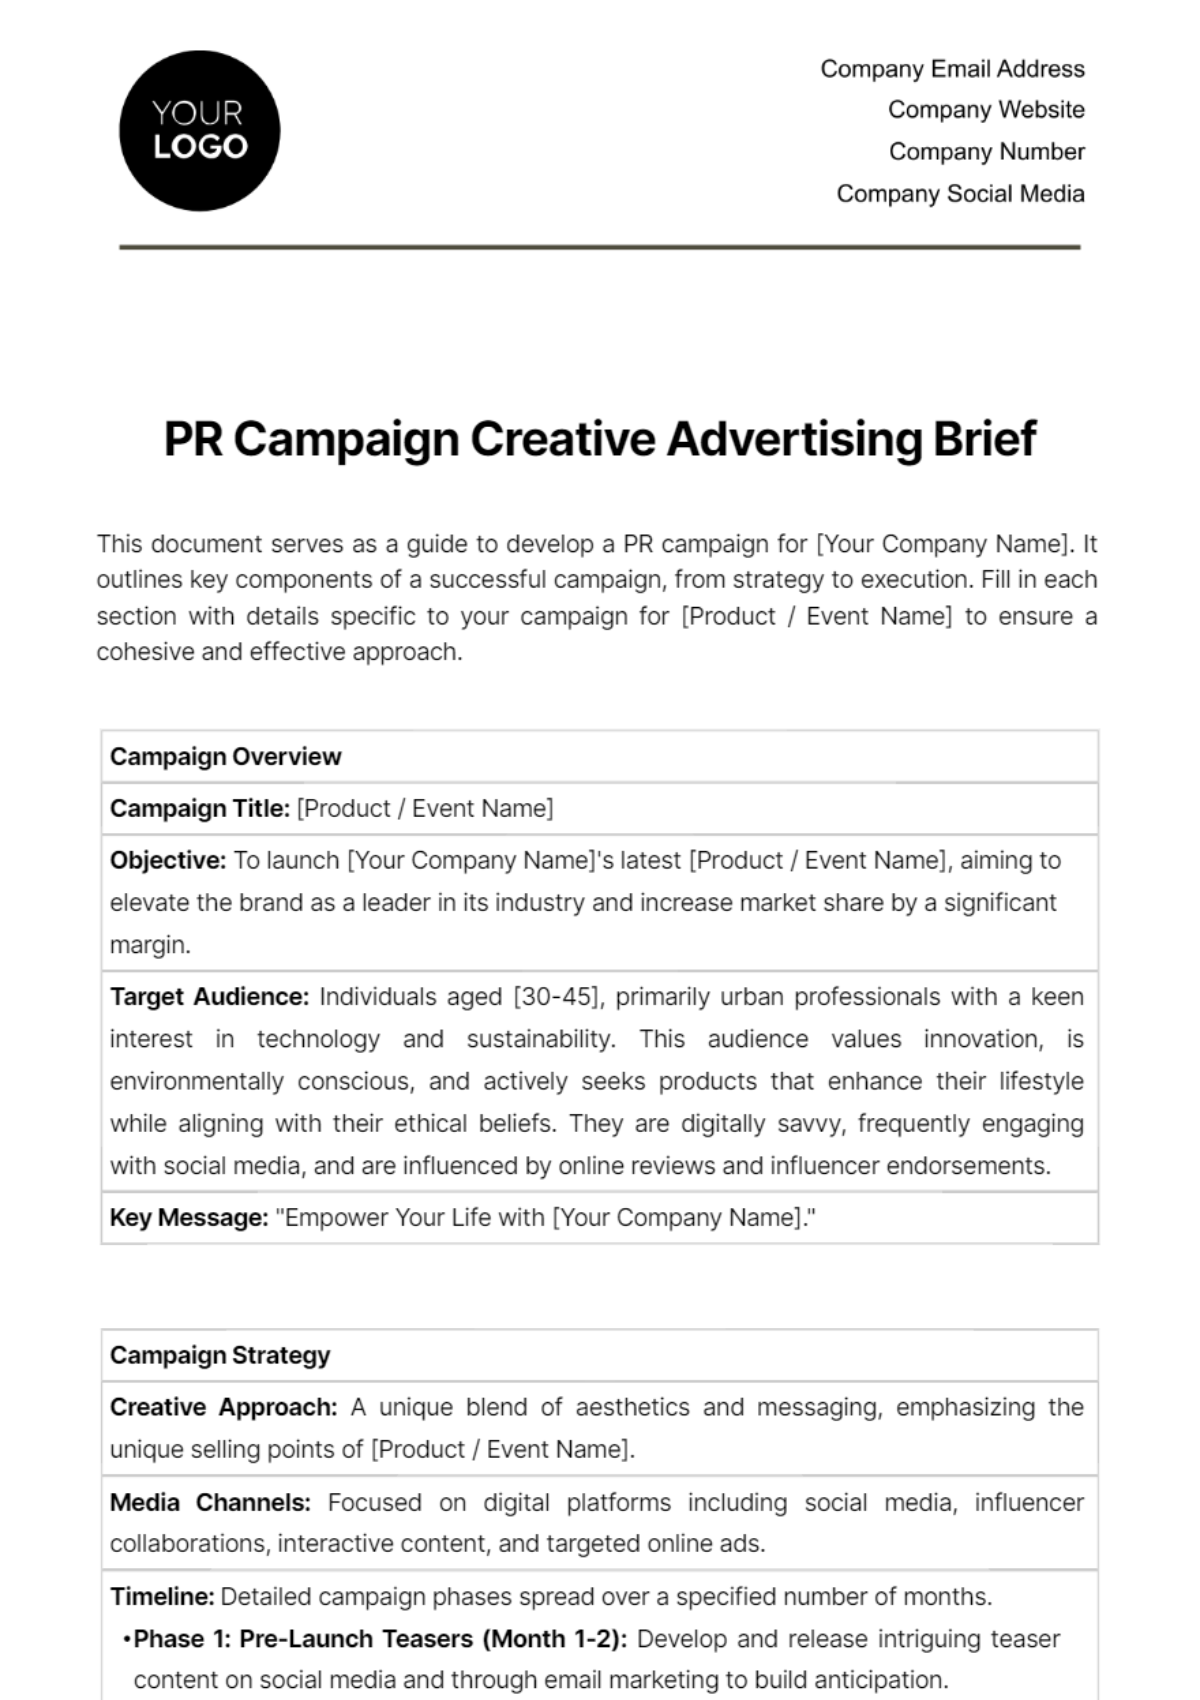 Free PR Campaign Creative Advertising Brief Template